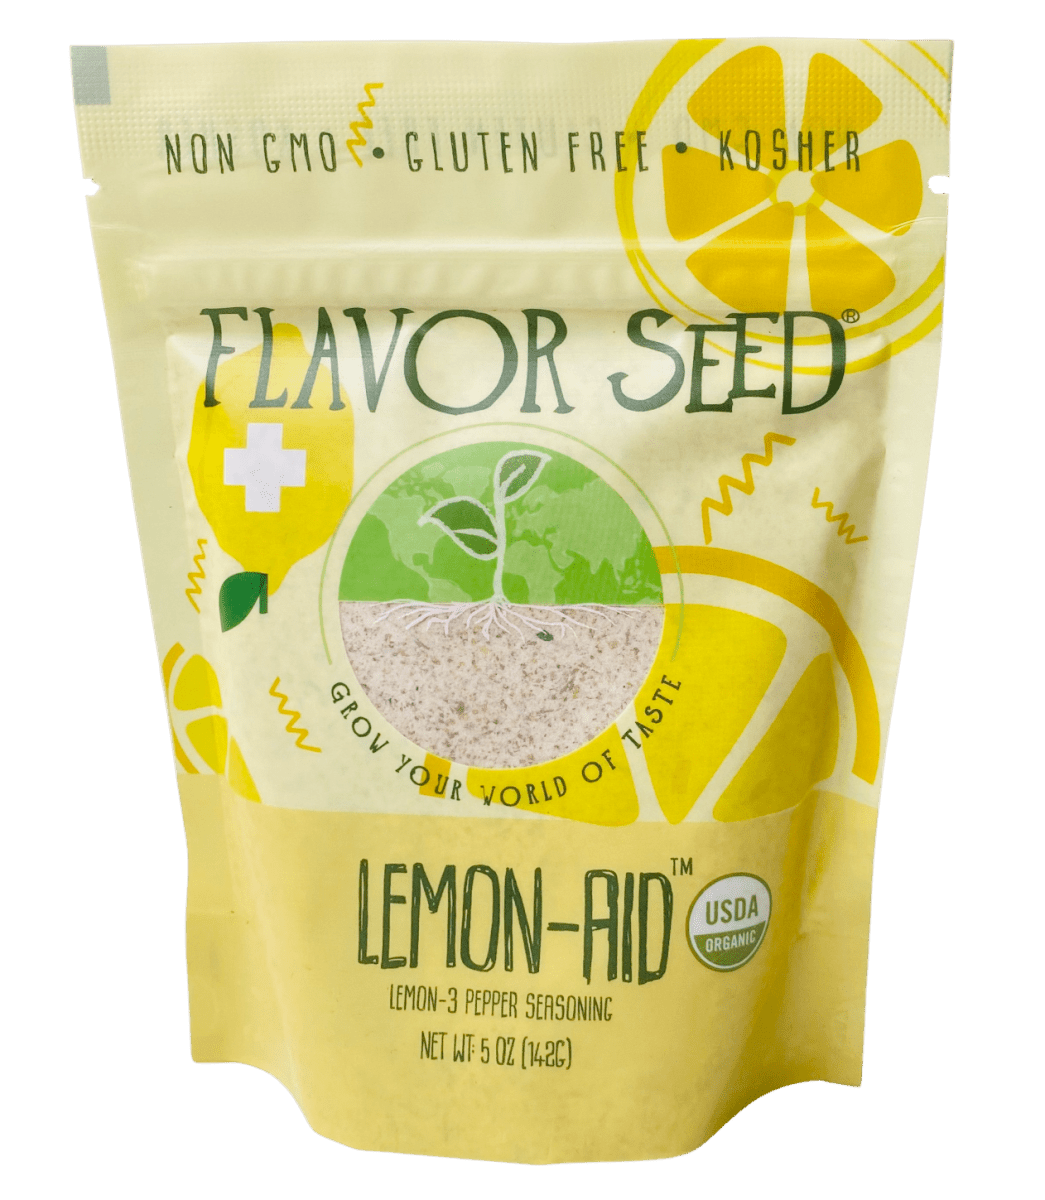 Simply Organic Lemon Pepper, Certified Organic | 3.17 oz